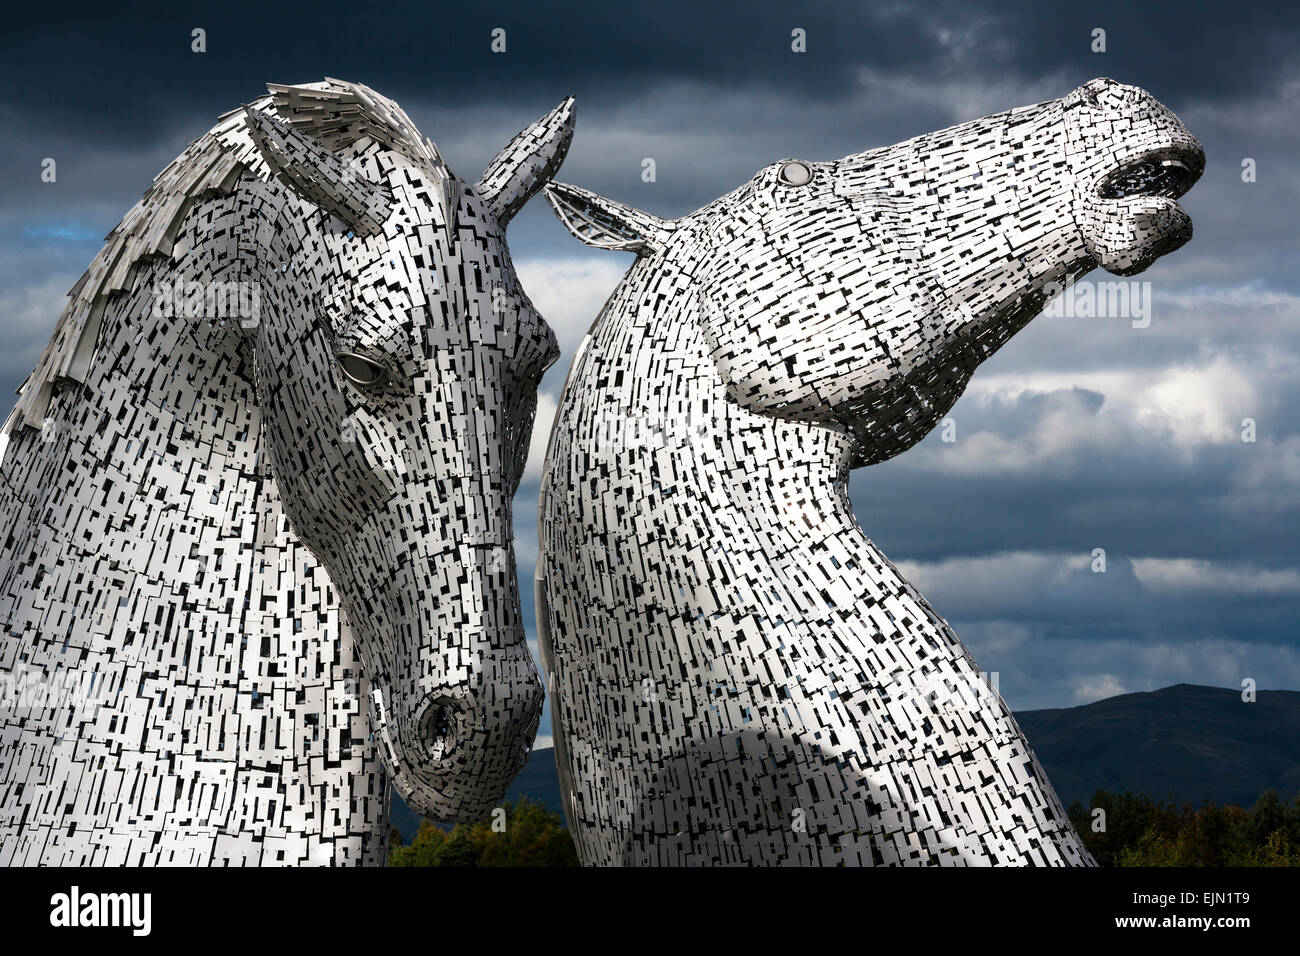 Die Kelpies Skulptur von Andy Scott, Pferde zwei riesige Köpfe Skulpturen aus Edelstahl, The Helix, Schottland. Stockfoto